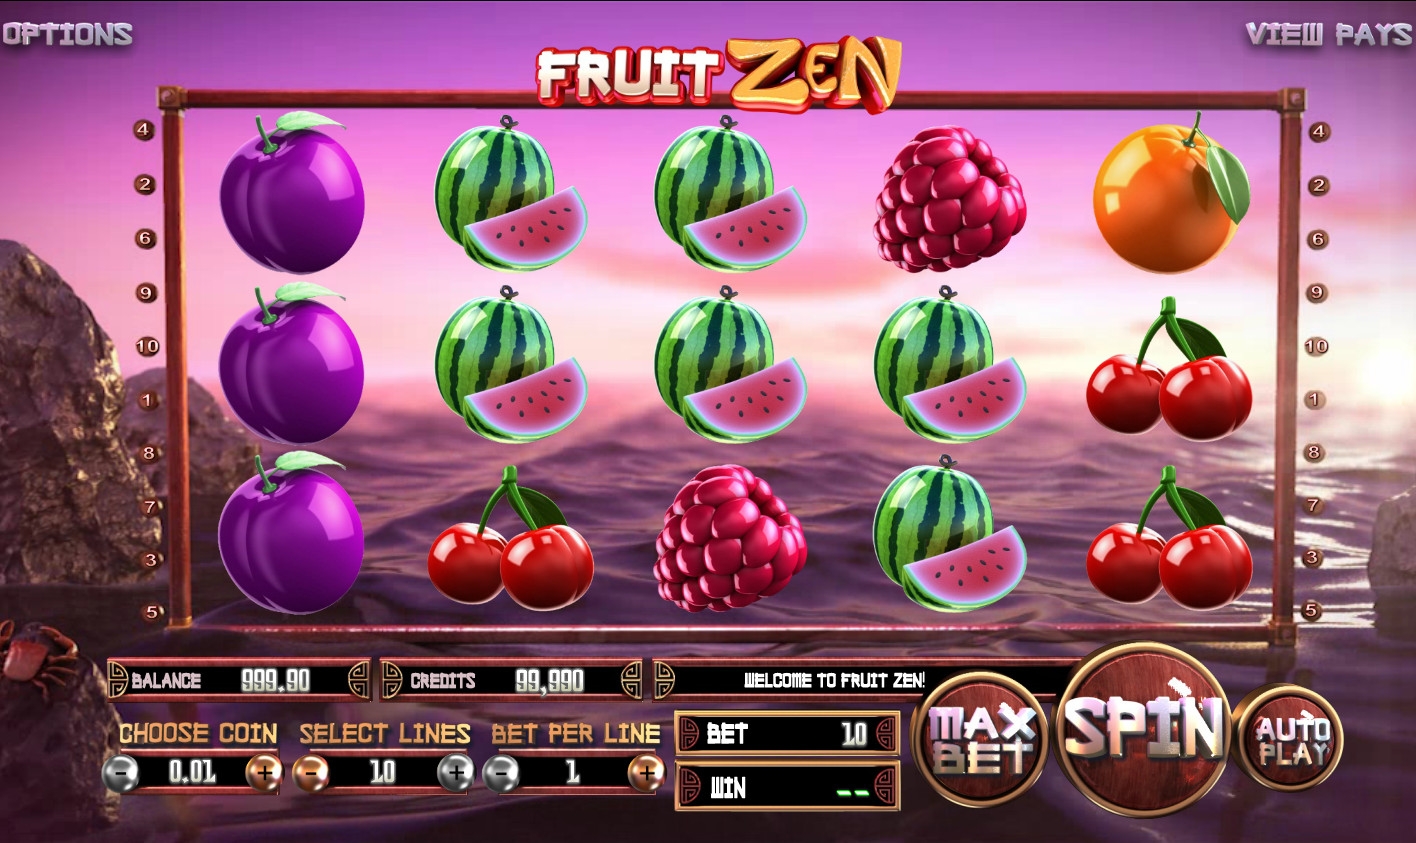 Fruit Zen (Fruit Zen) from category Slots